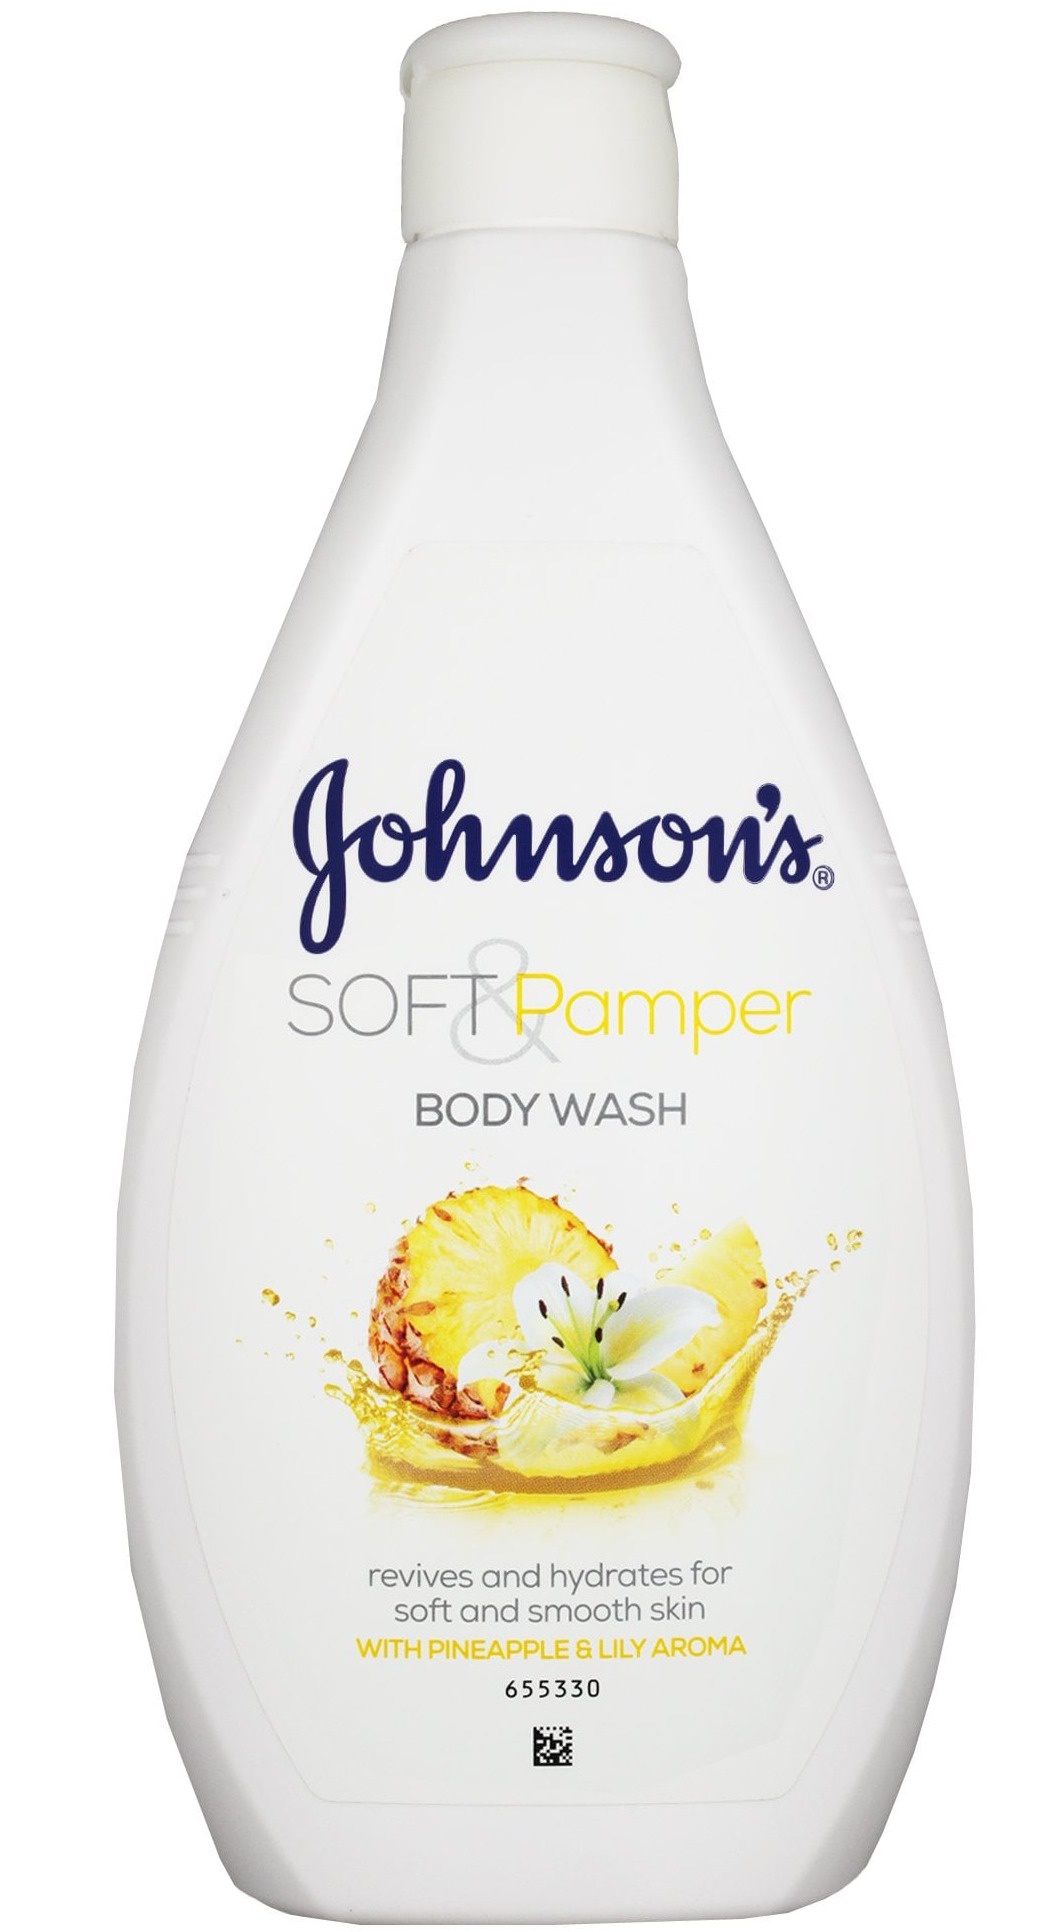 Johnson's Soft & Pamper Body Wash